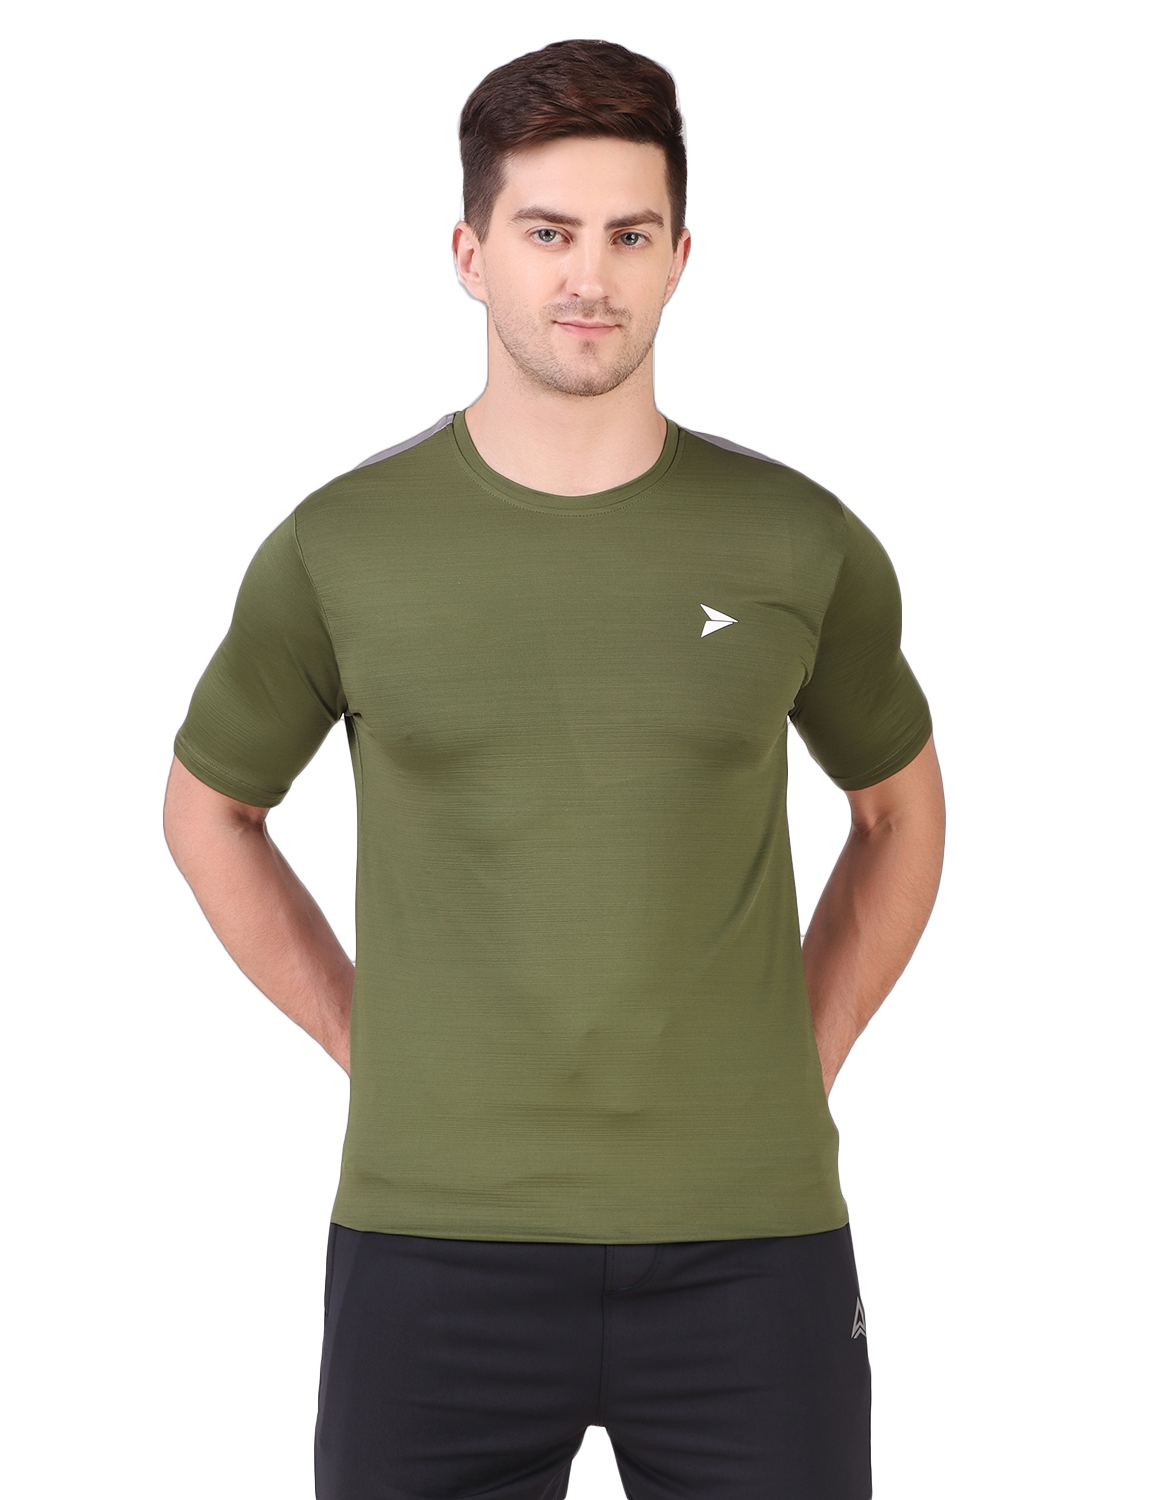 Fitinc | Fitinc Men's Round Neck Slimfit Gym & Active Sports Olive T-Shirt